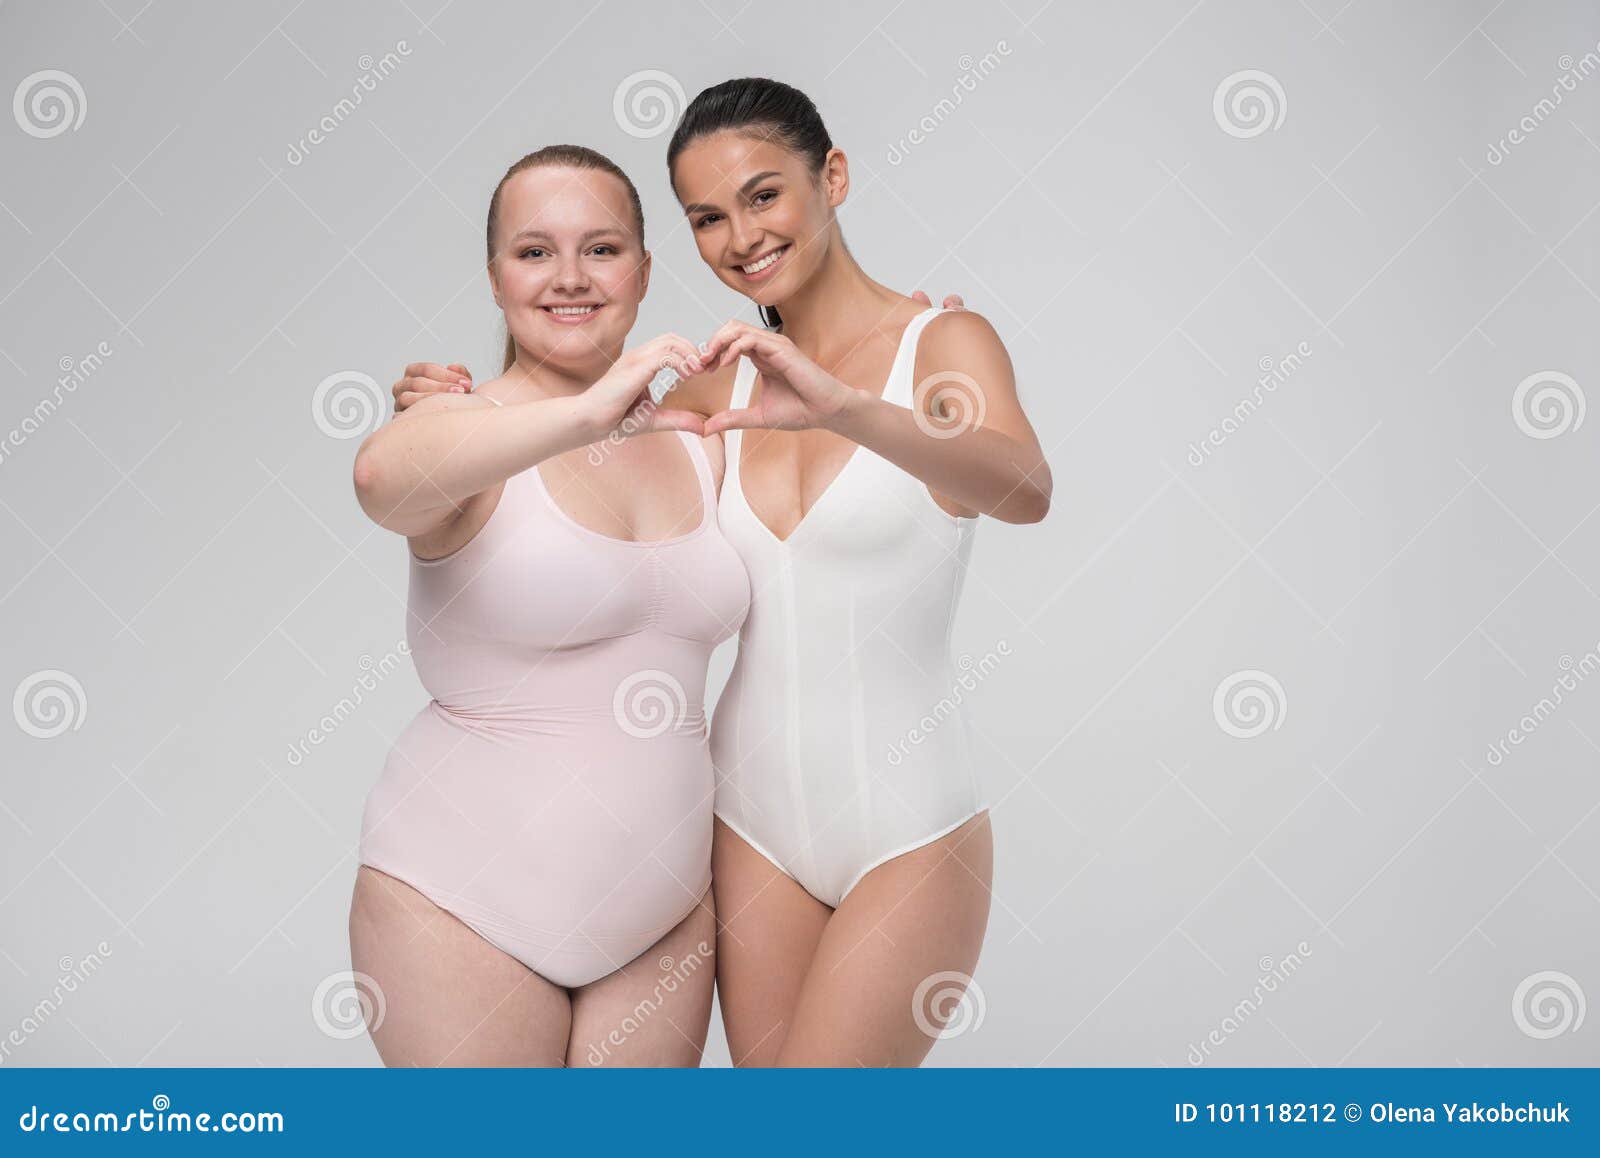 skinny girl fat girl lesbian